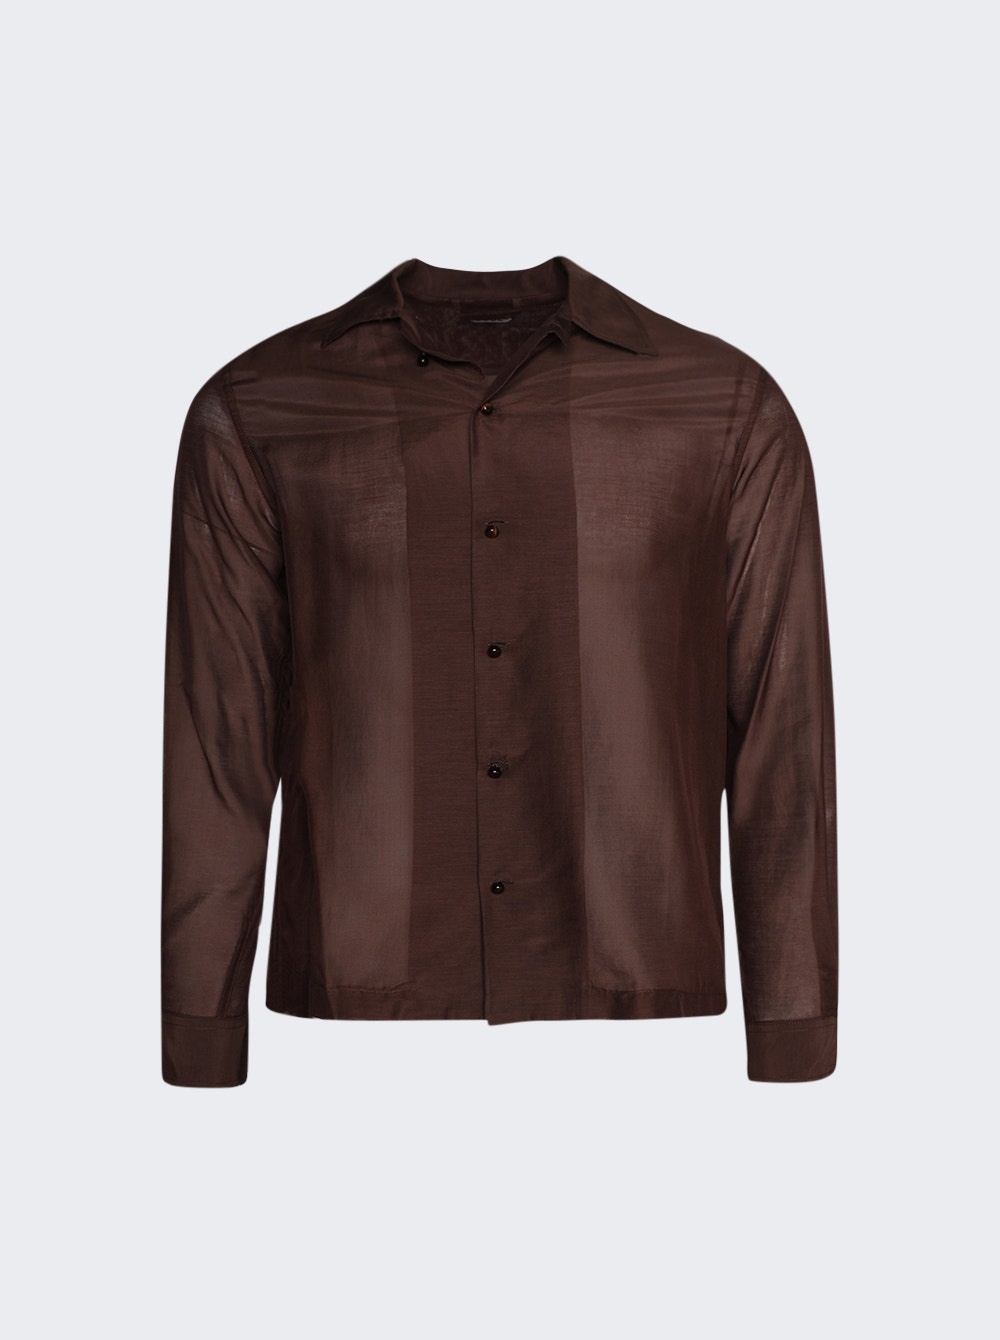 Heartwood Shirt Brown - 1